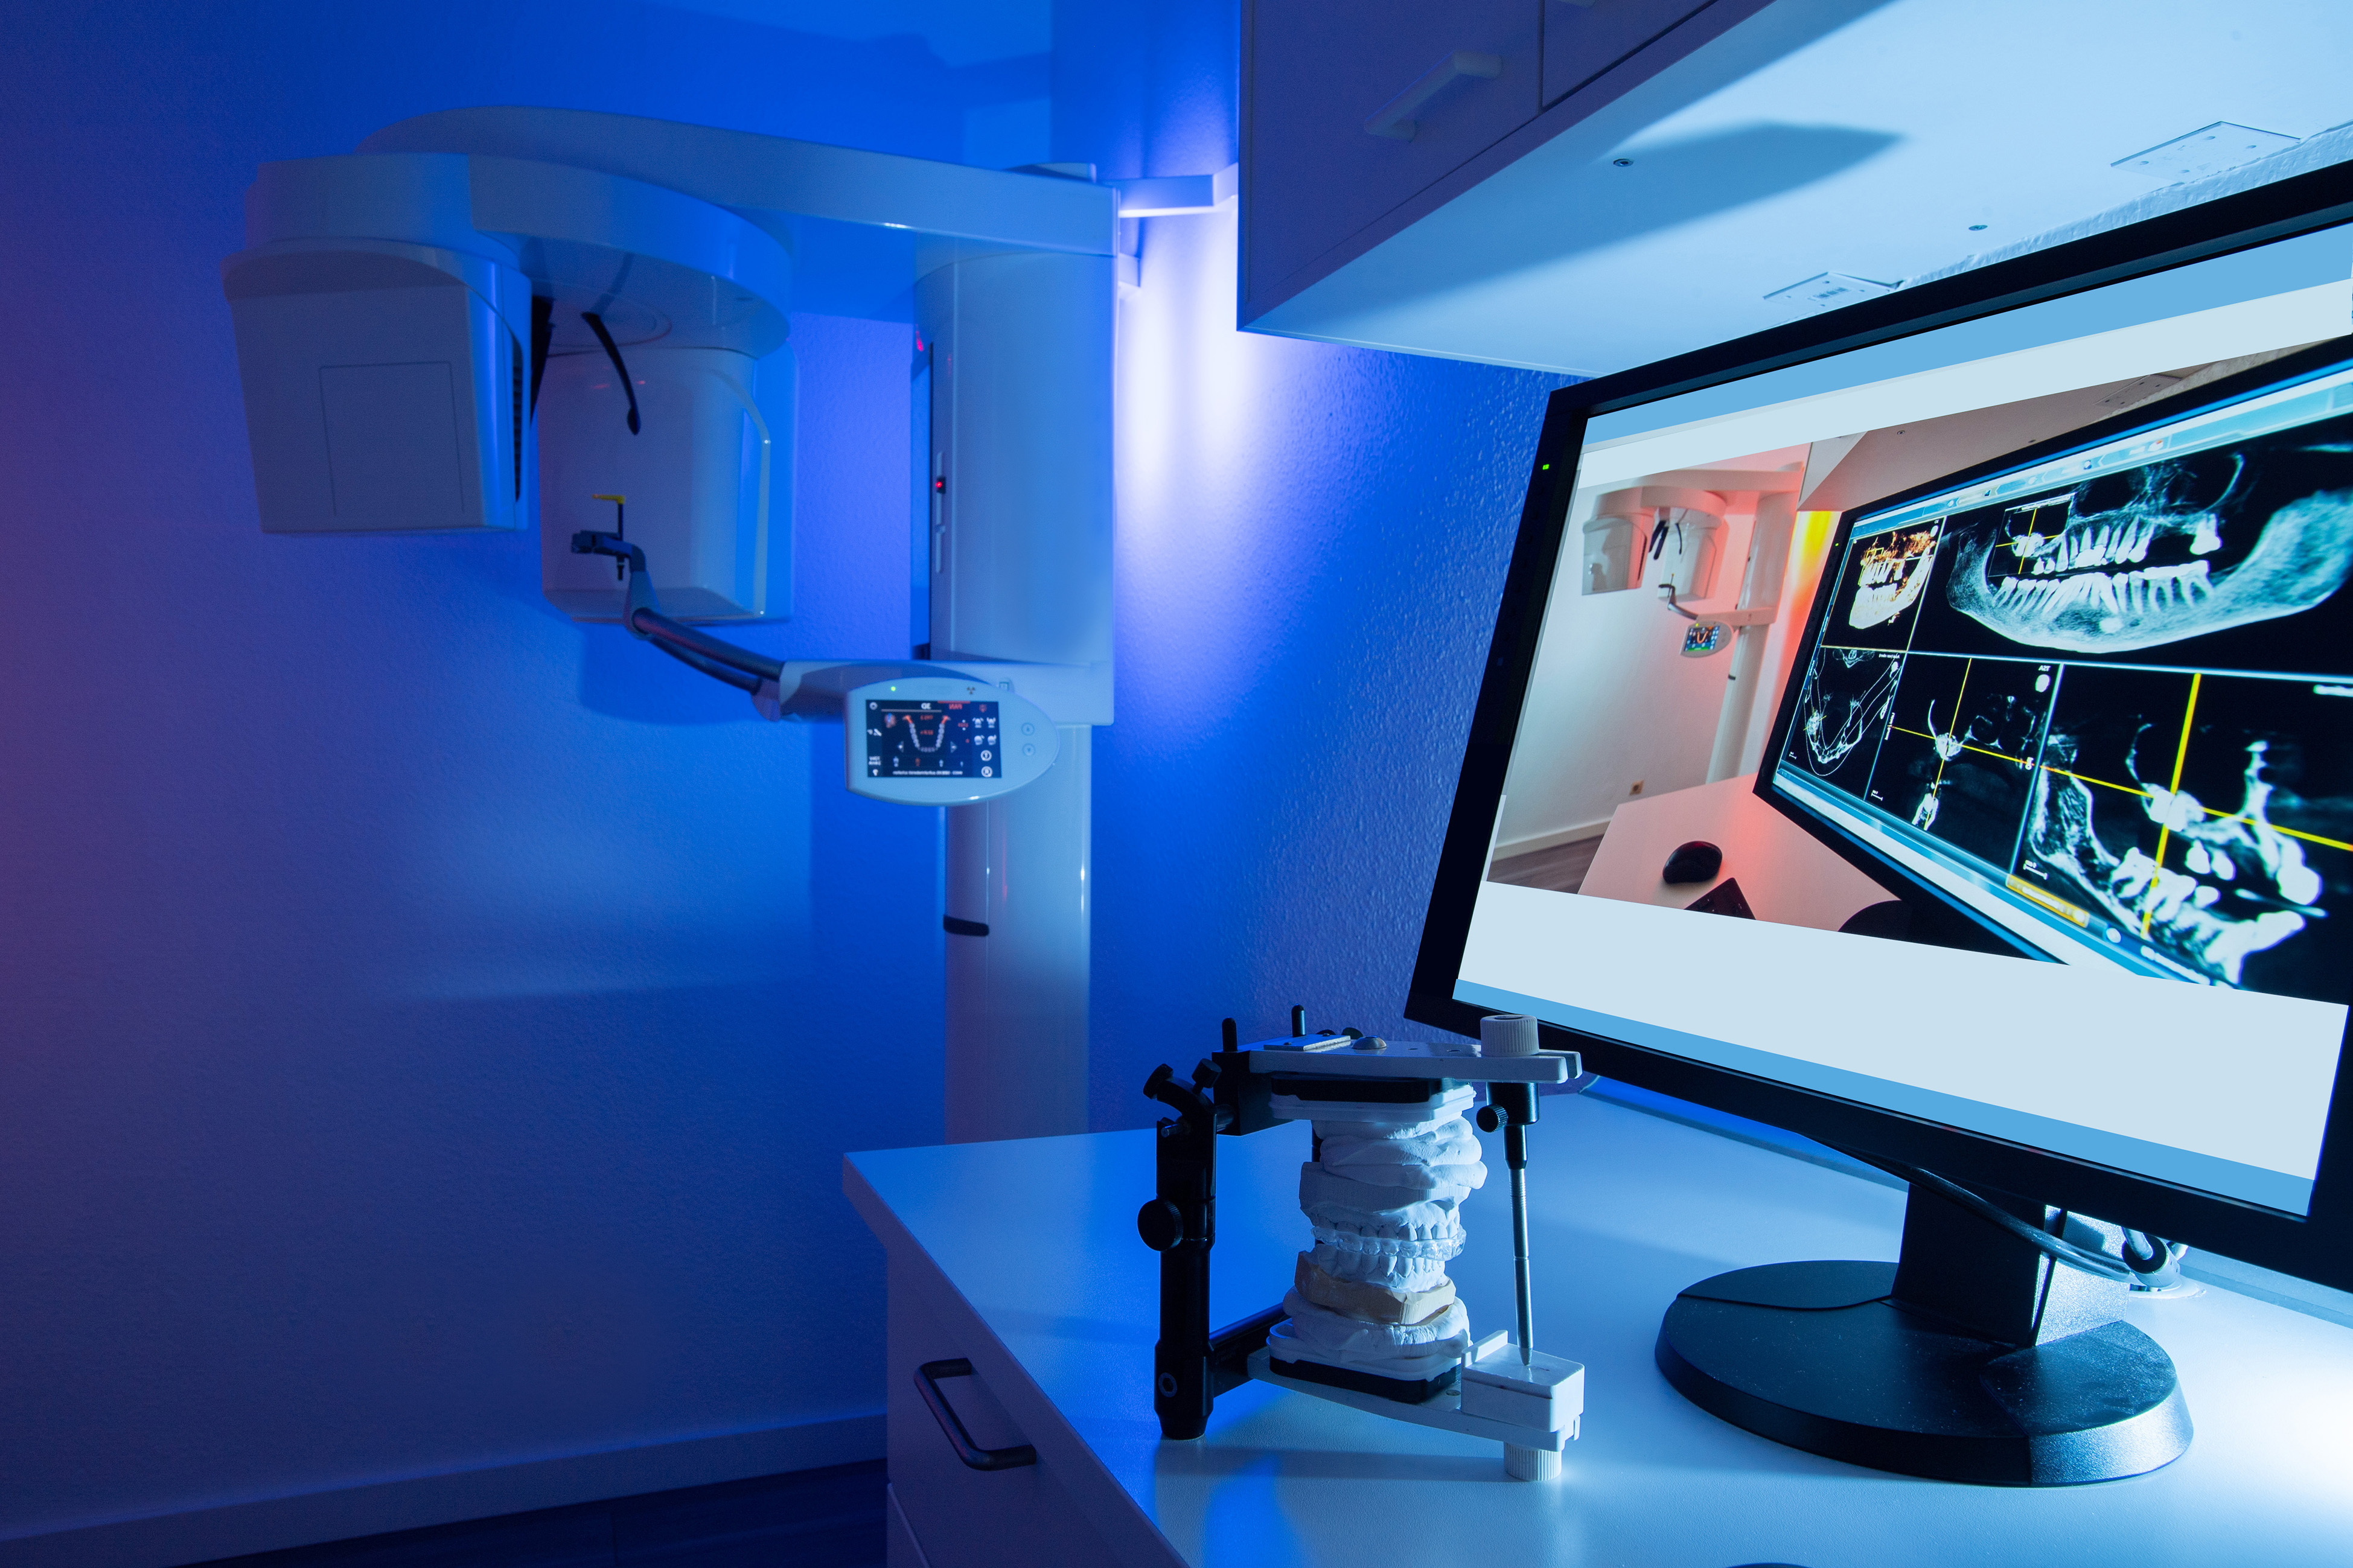 Röntgengerät, Monitor und Artikulator in Arztpraxis